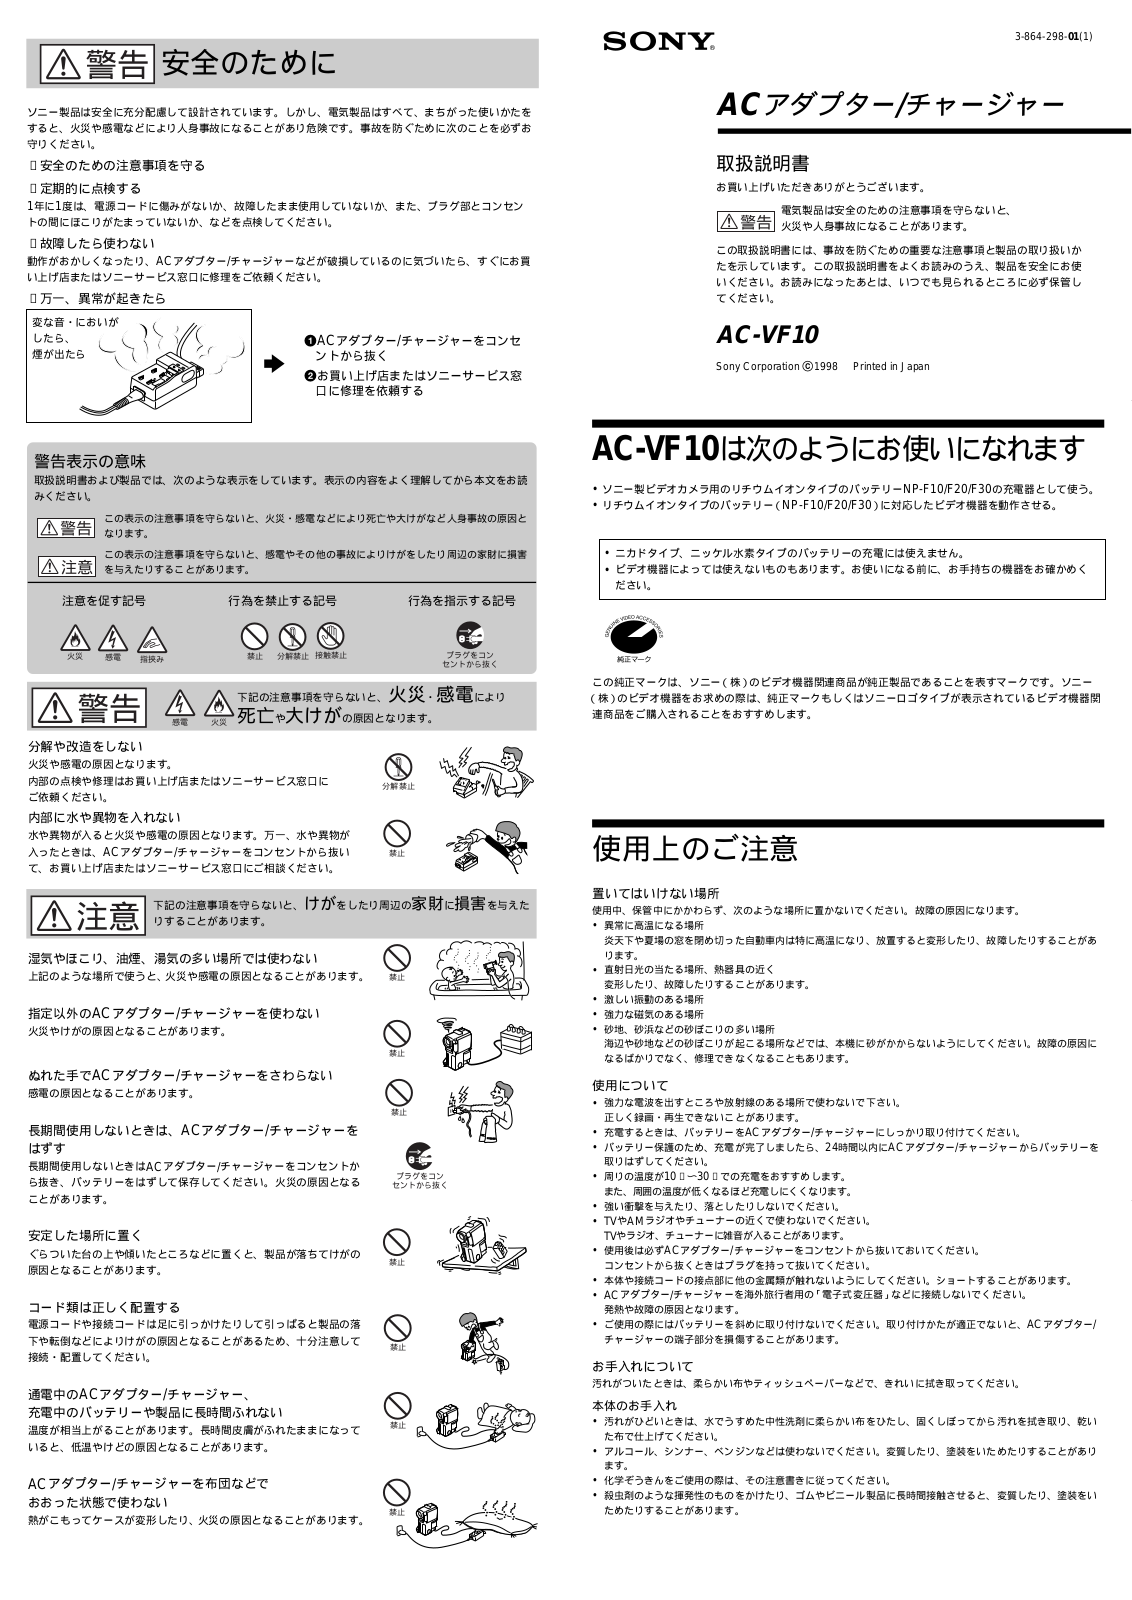 SONY AC-VF10 User Manual